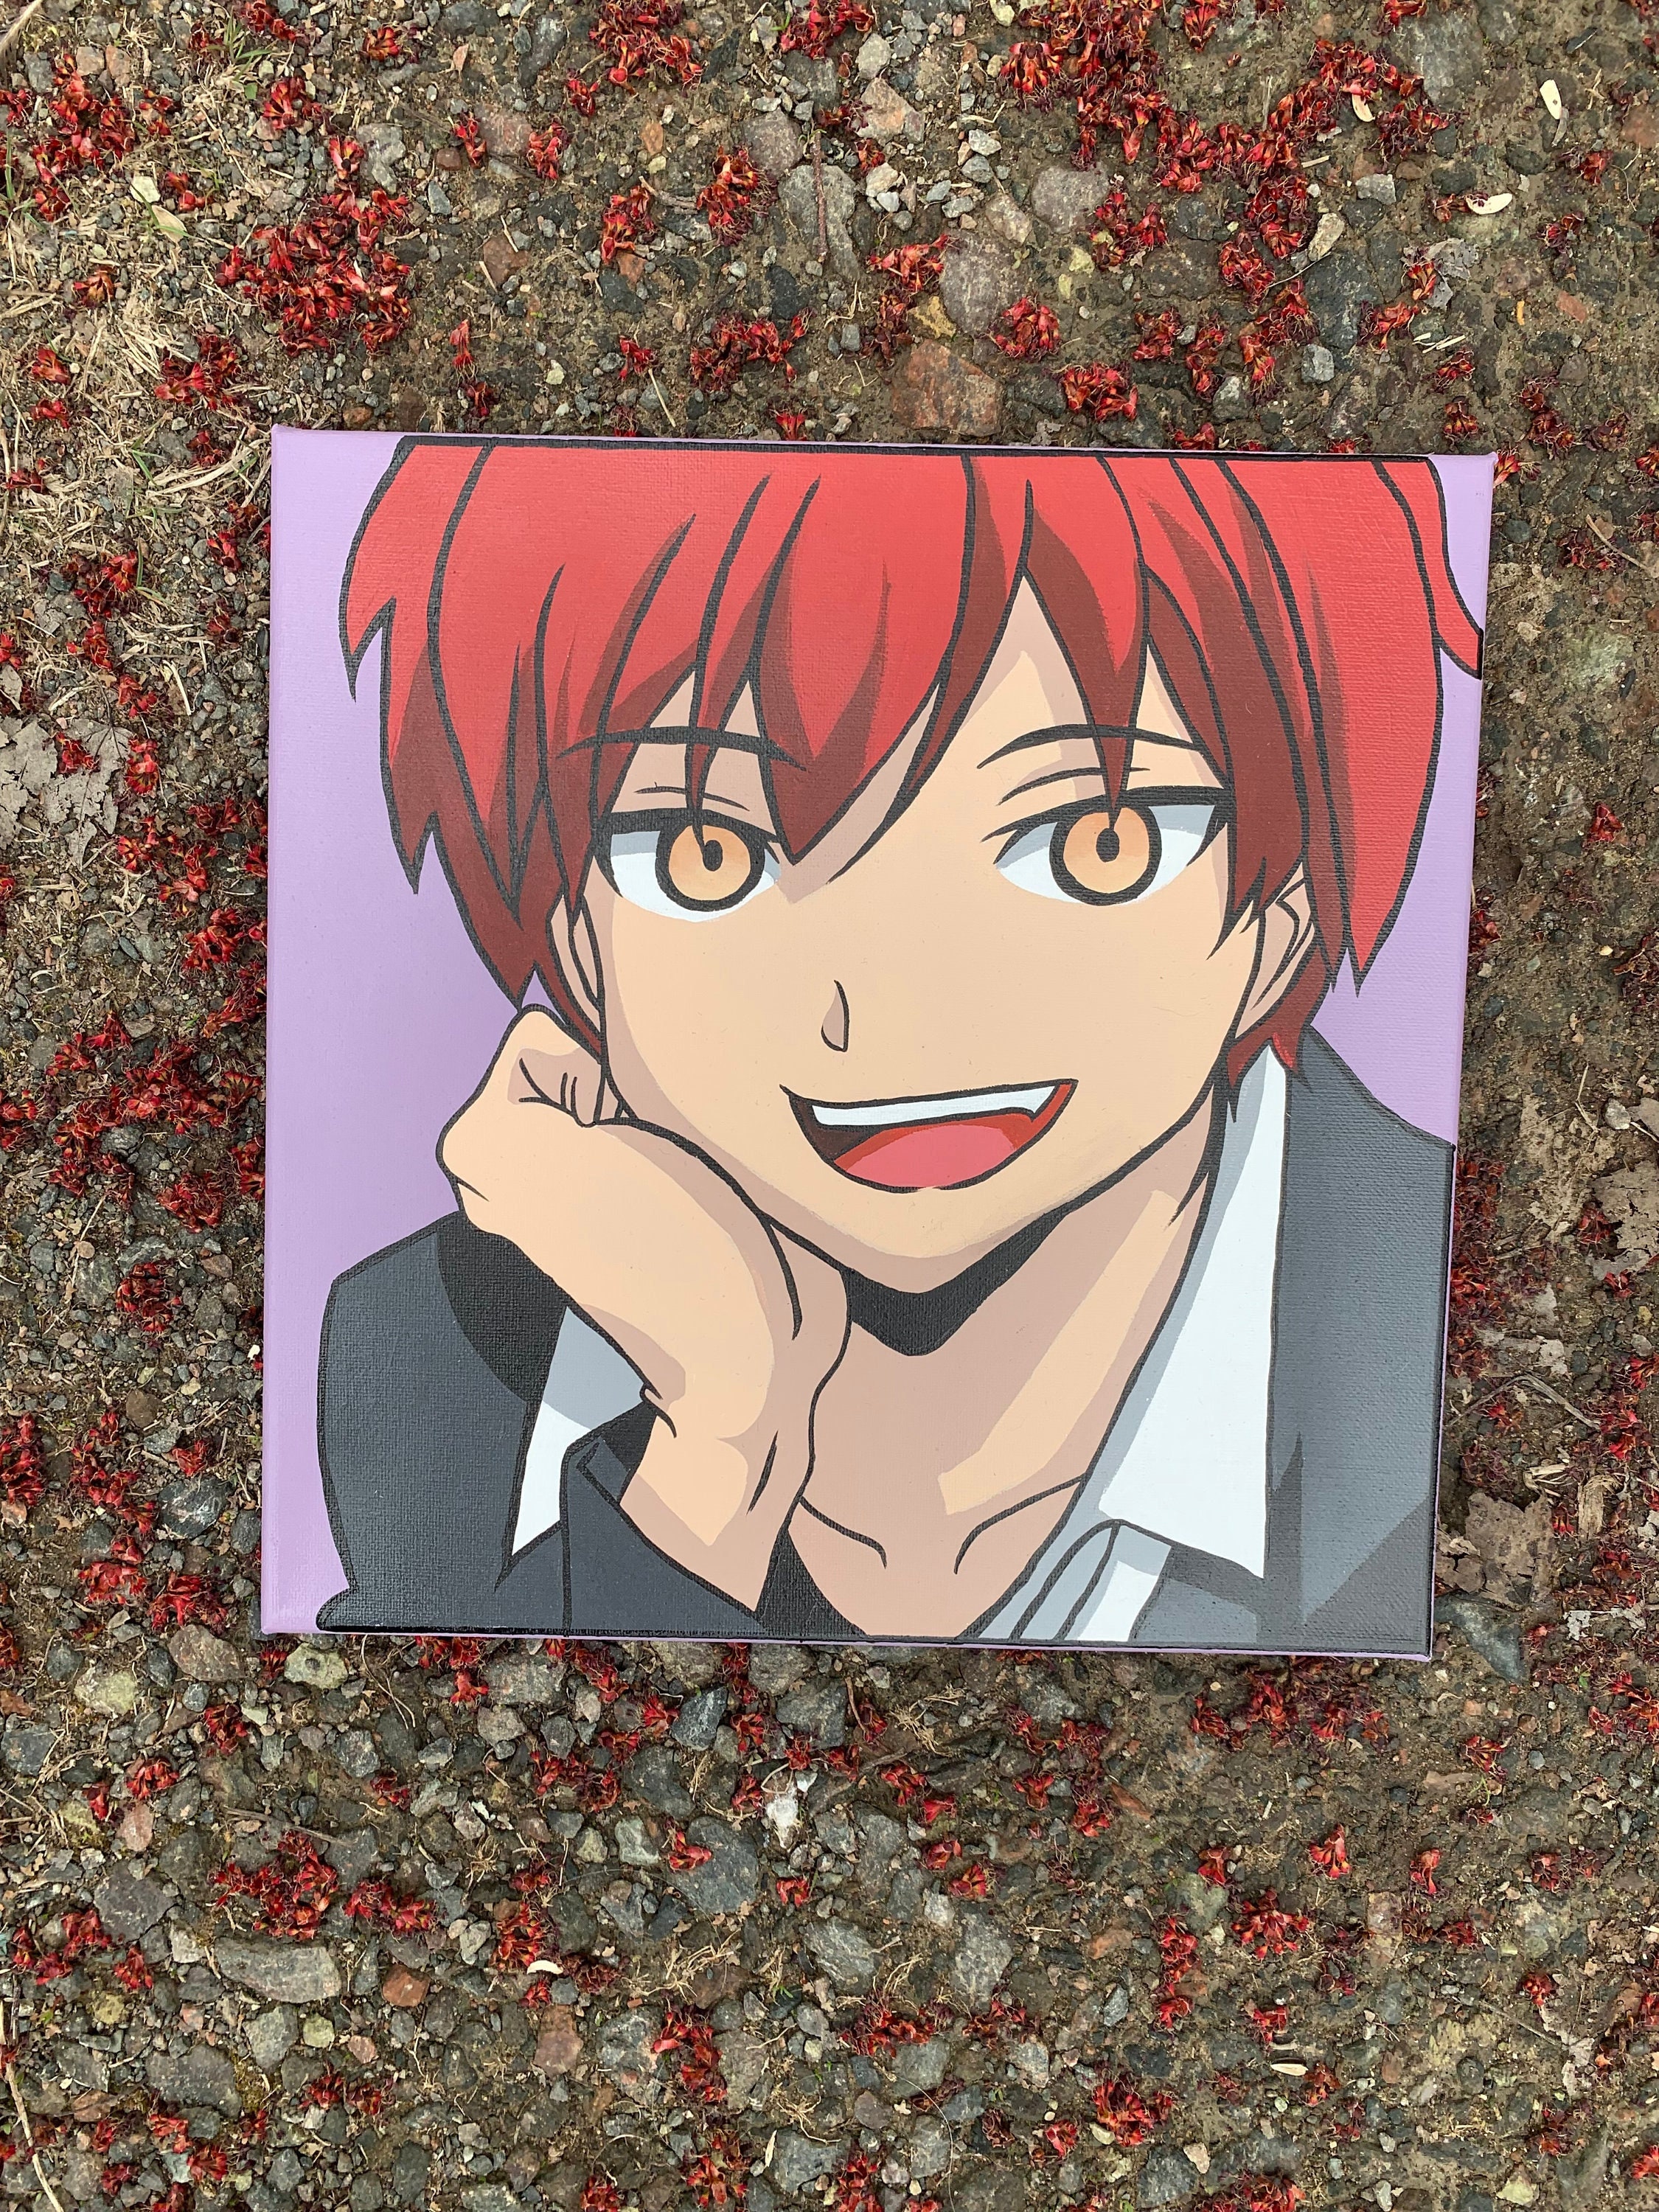 Red haired anime character illustration, Karma Akabane